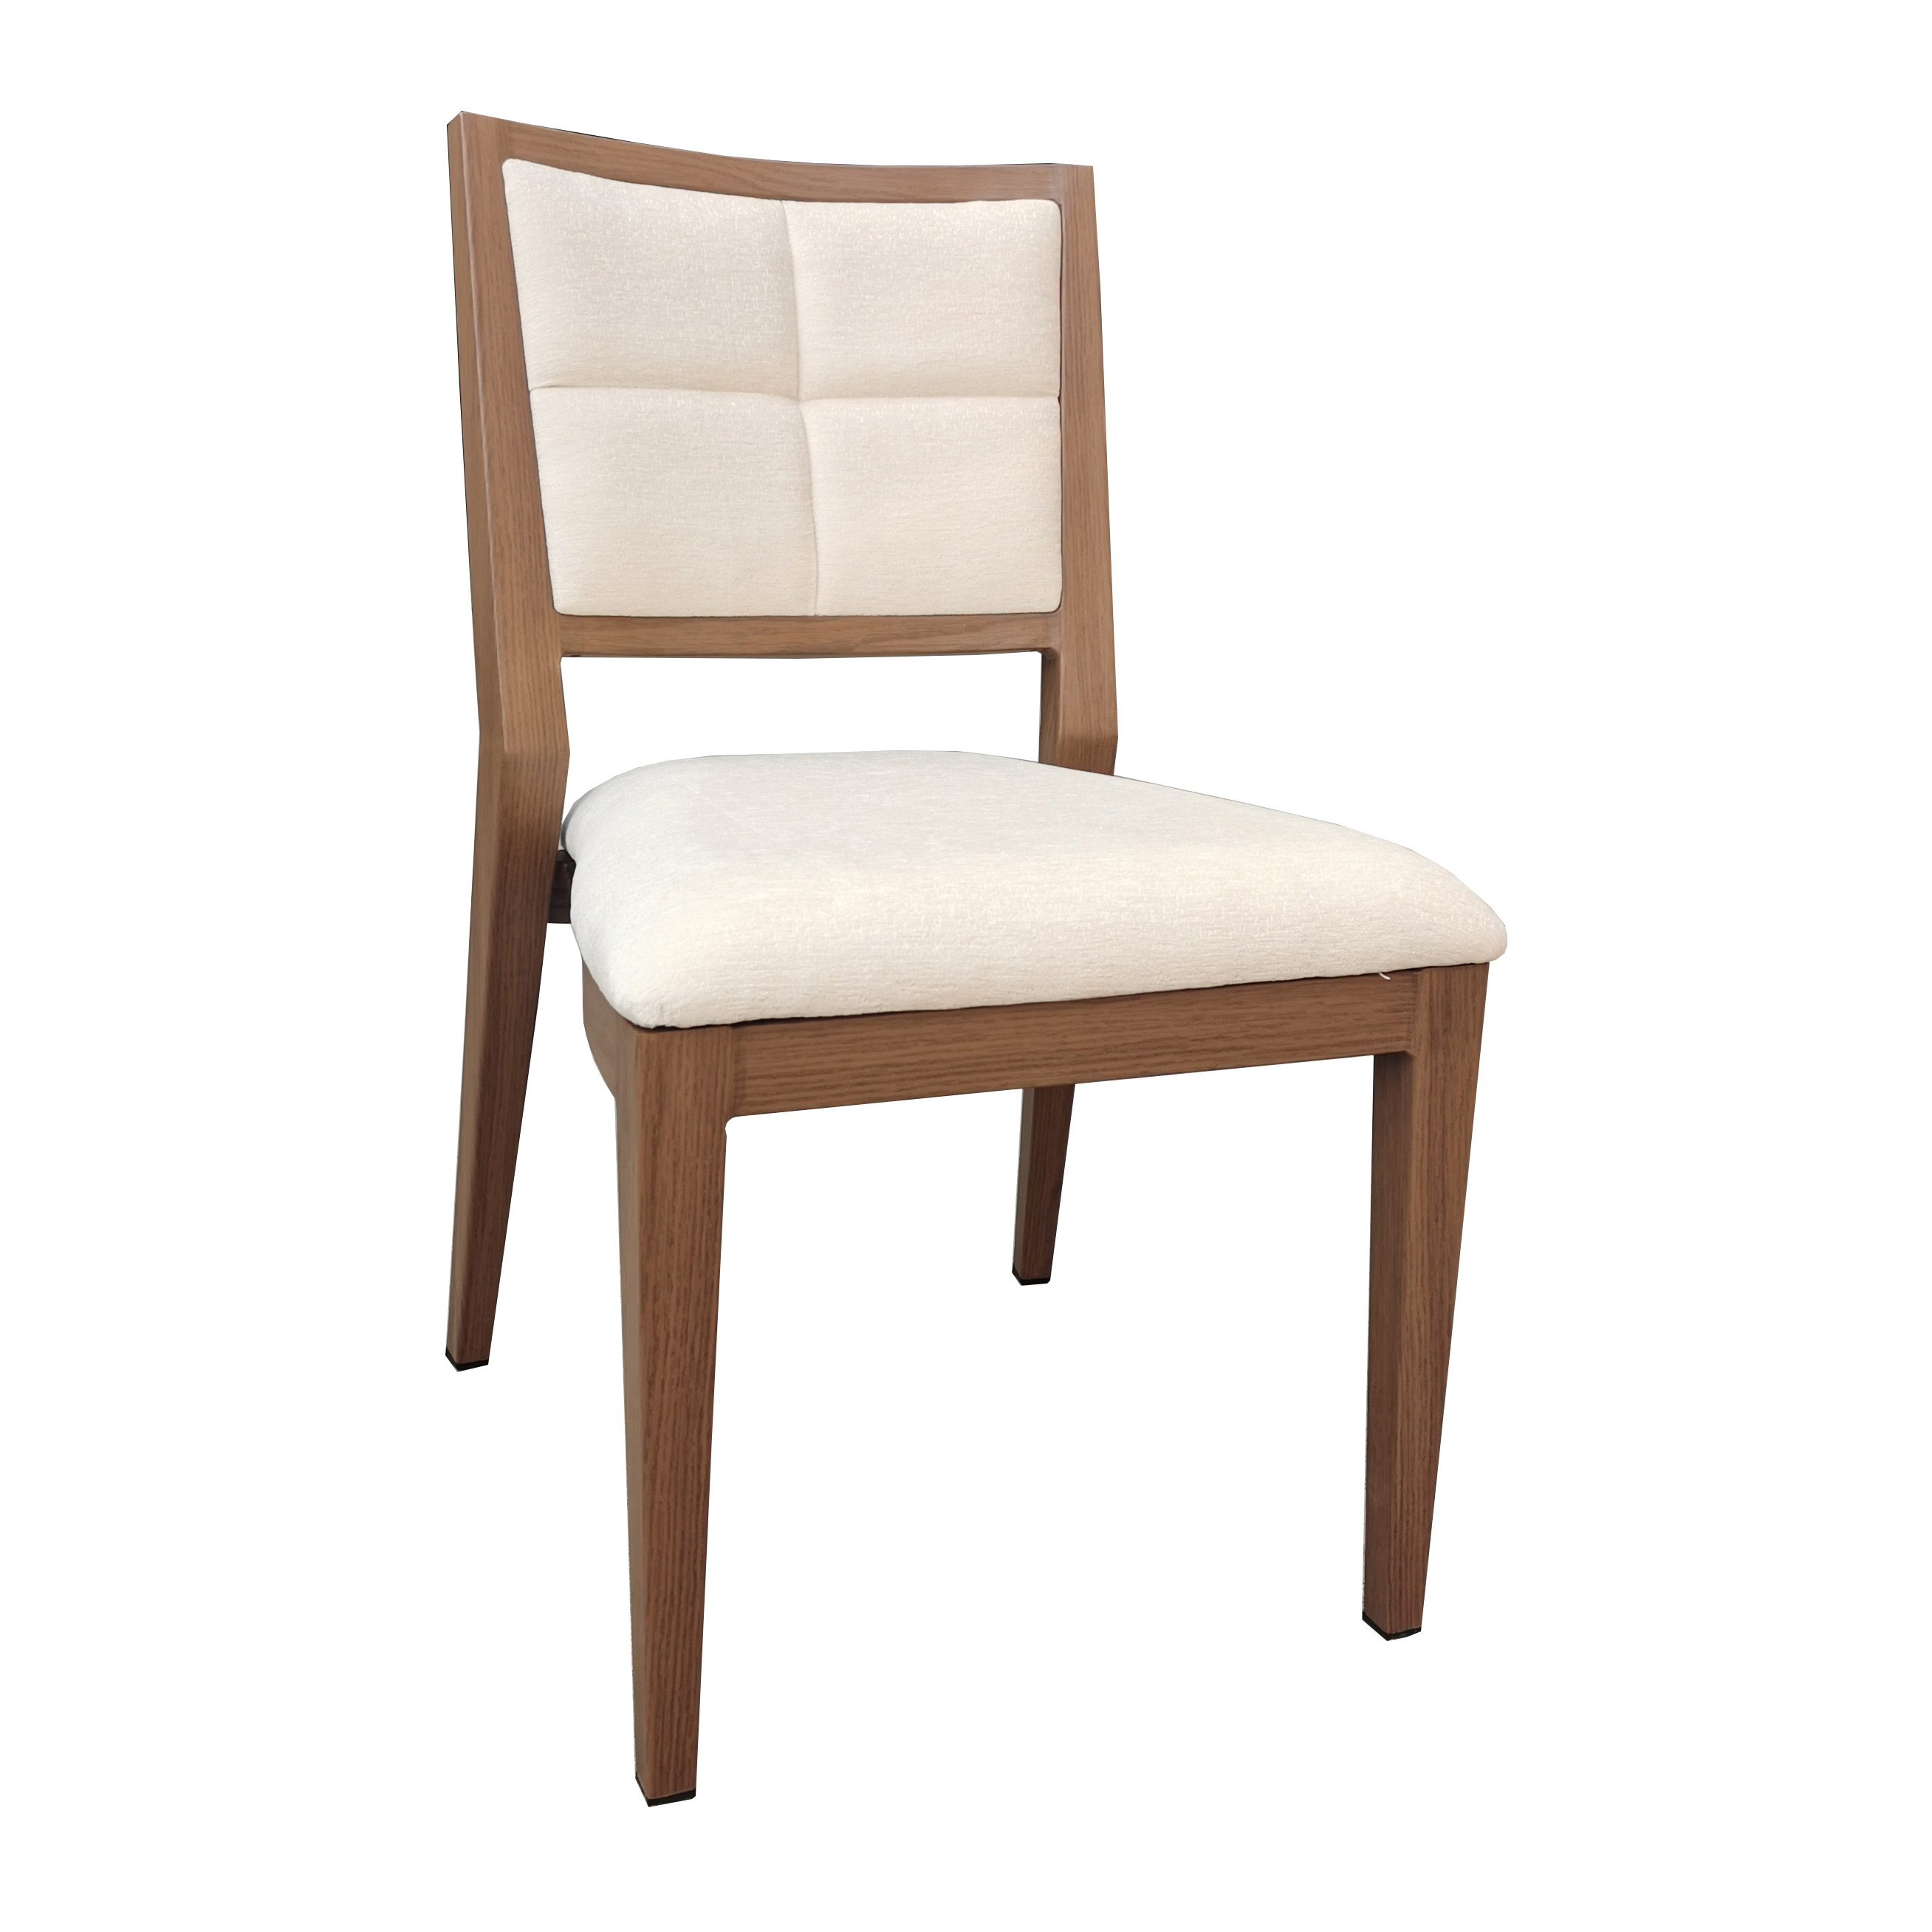 LTM-003 Milano Modern Padded Wood Grain Aluminum Chair